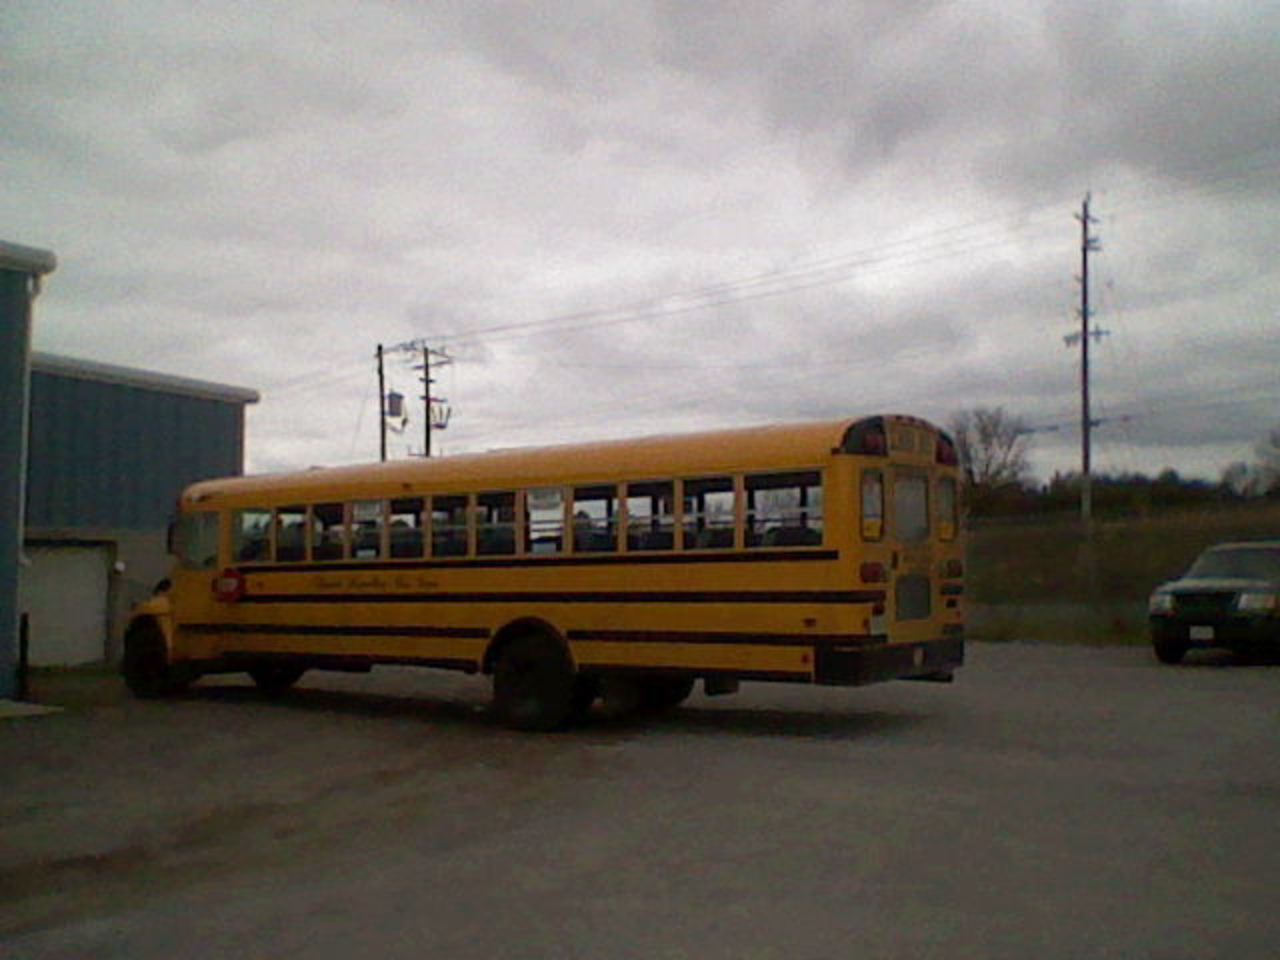 2009 IC international 3300 DT466 school bus | Flickr - Photo Sharing!